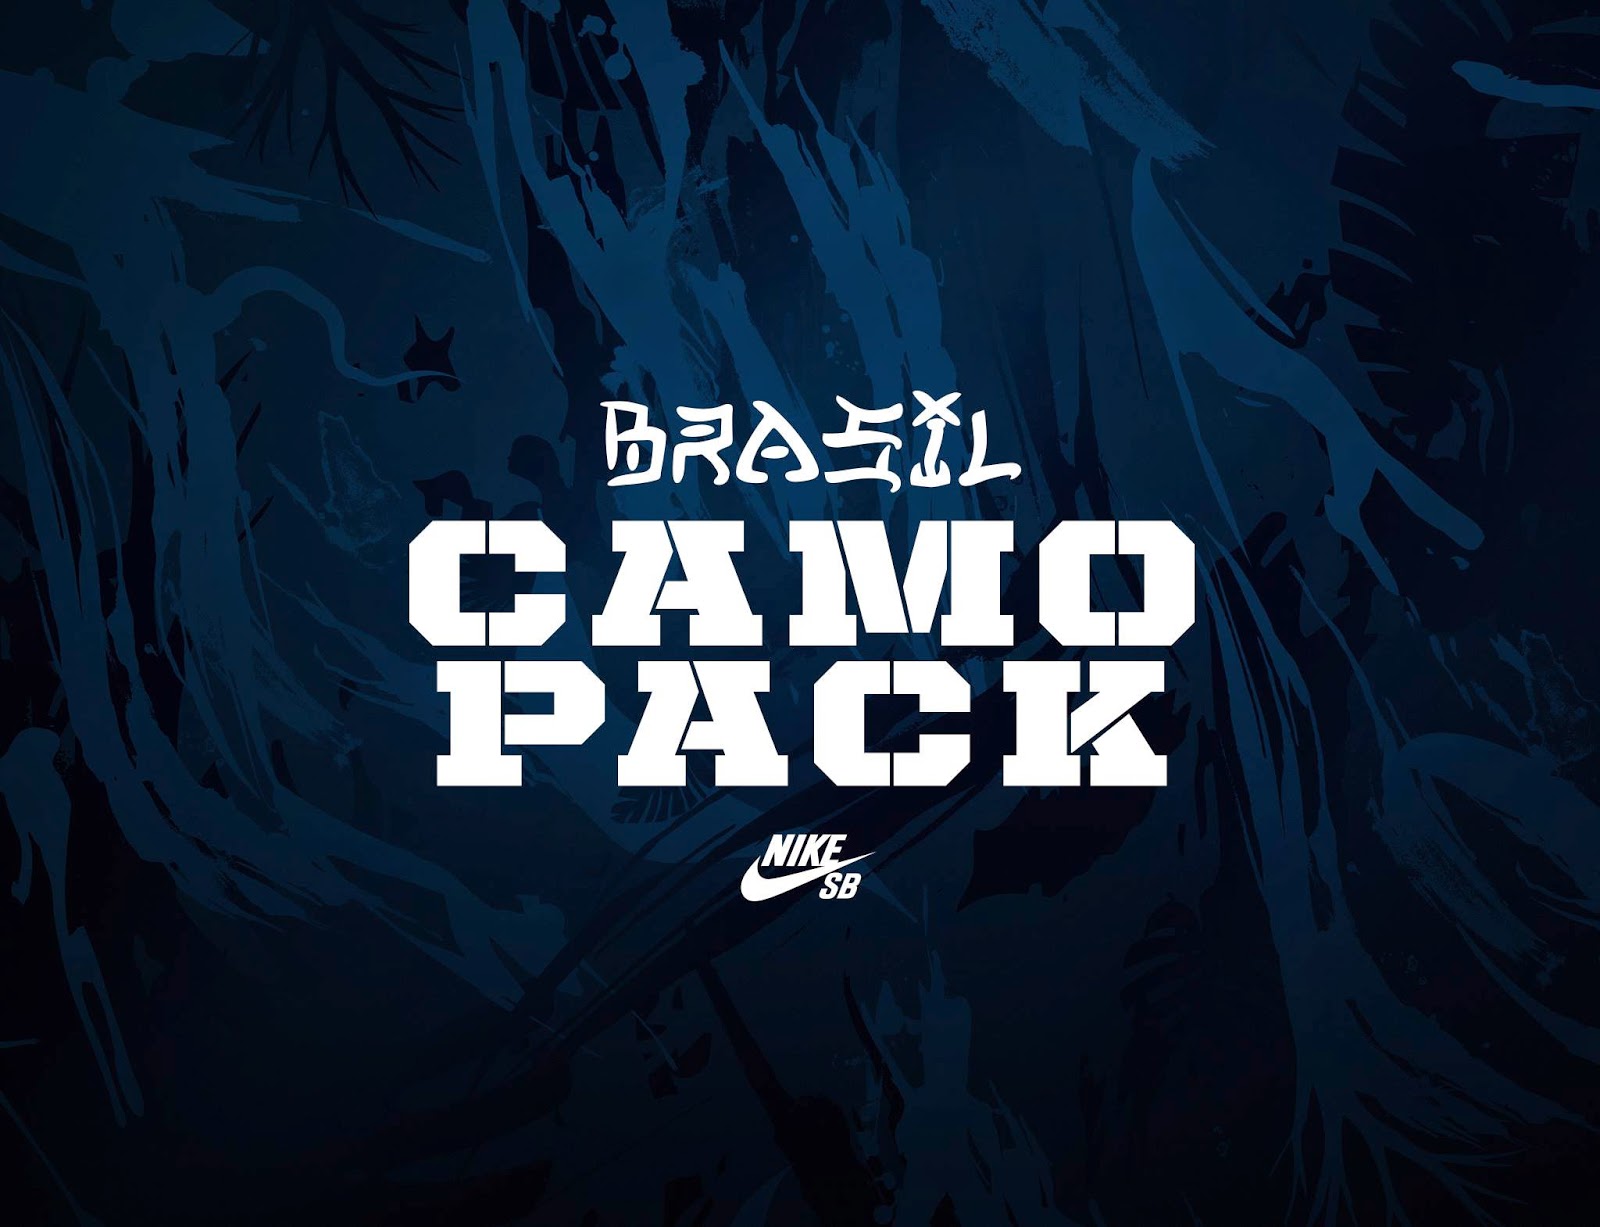 nike sb brasil camo pack 01 - Nike SB lança pack em homenagem ao Brasil